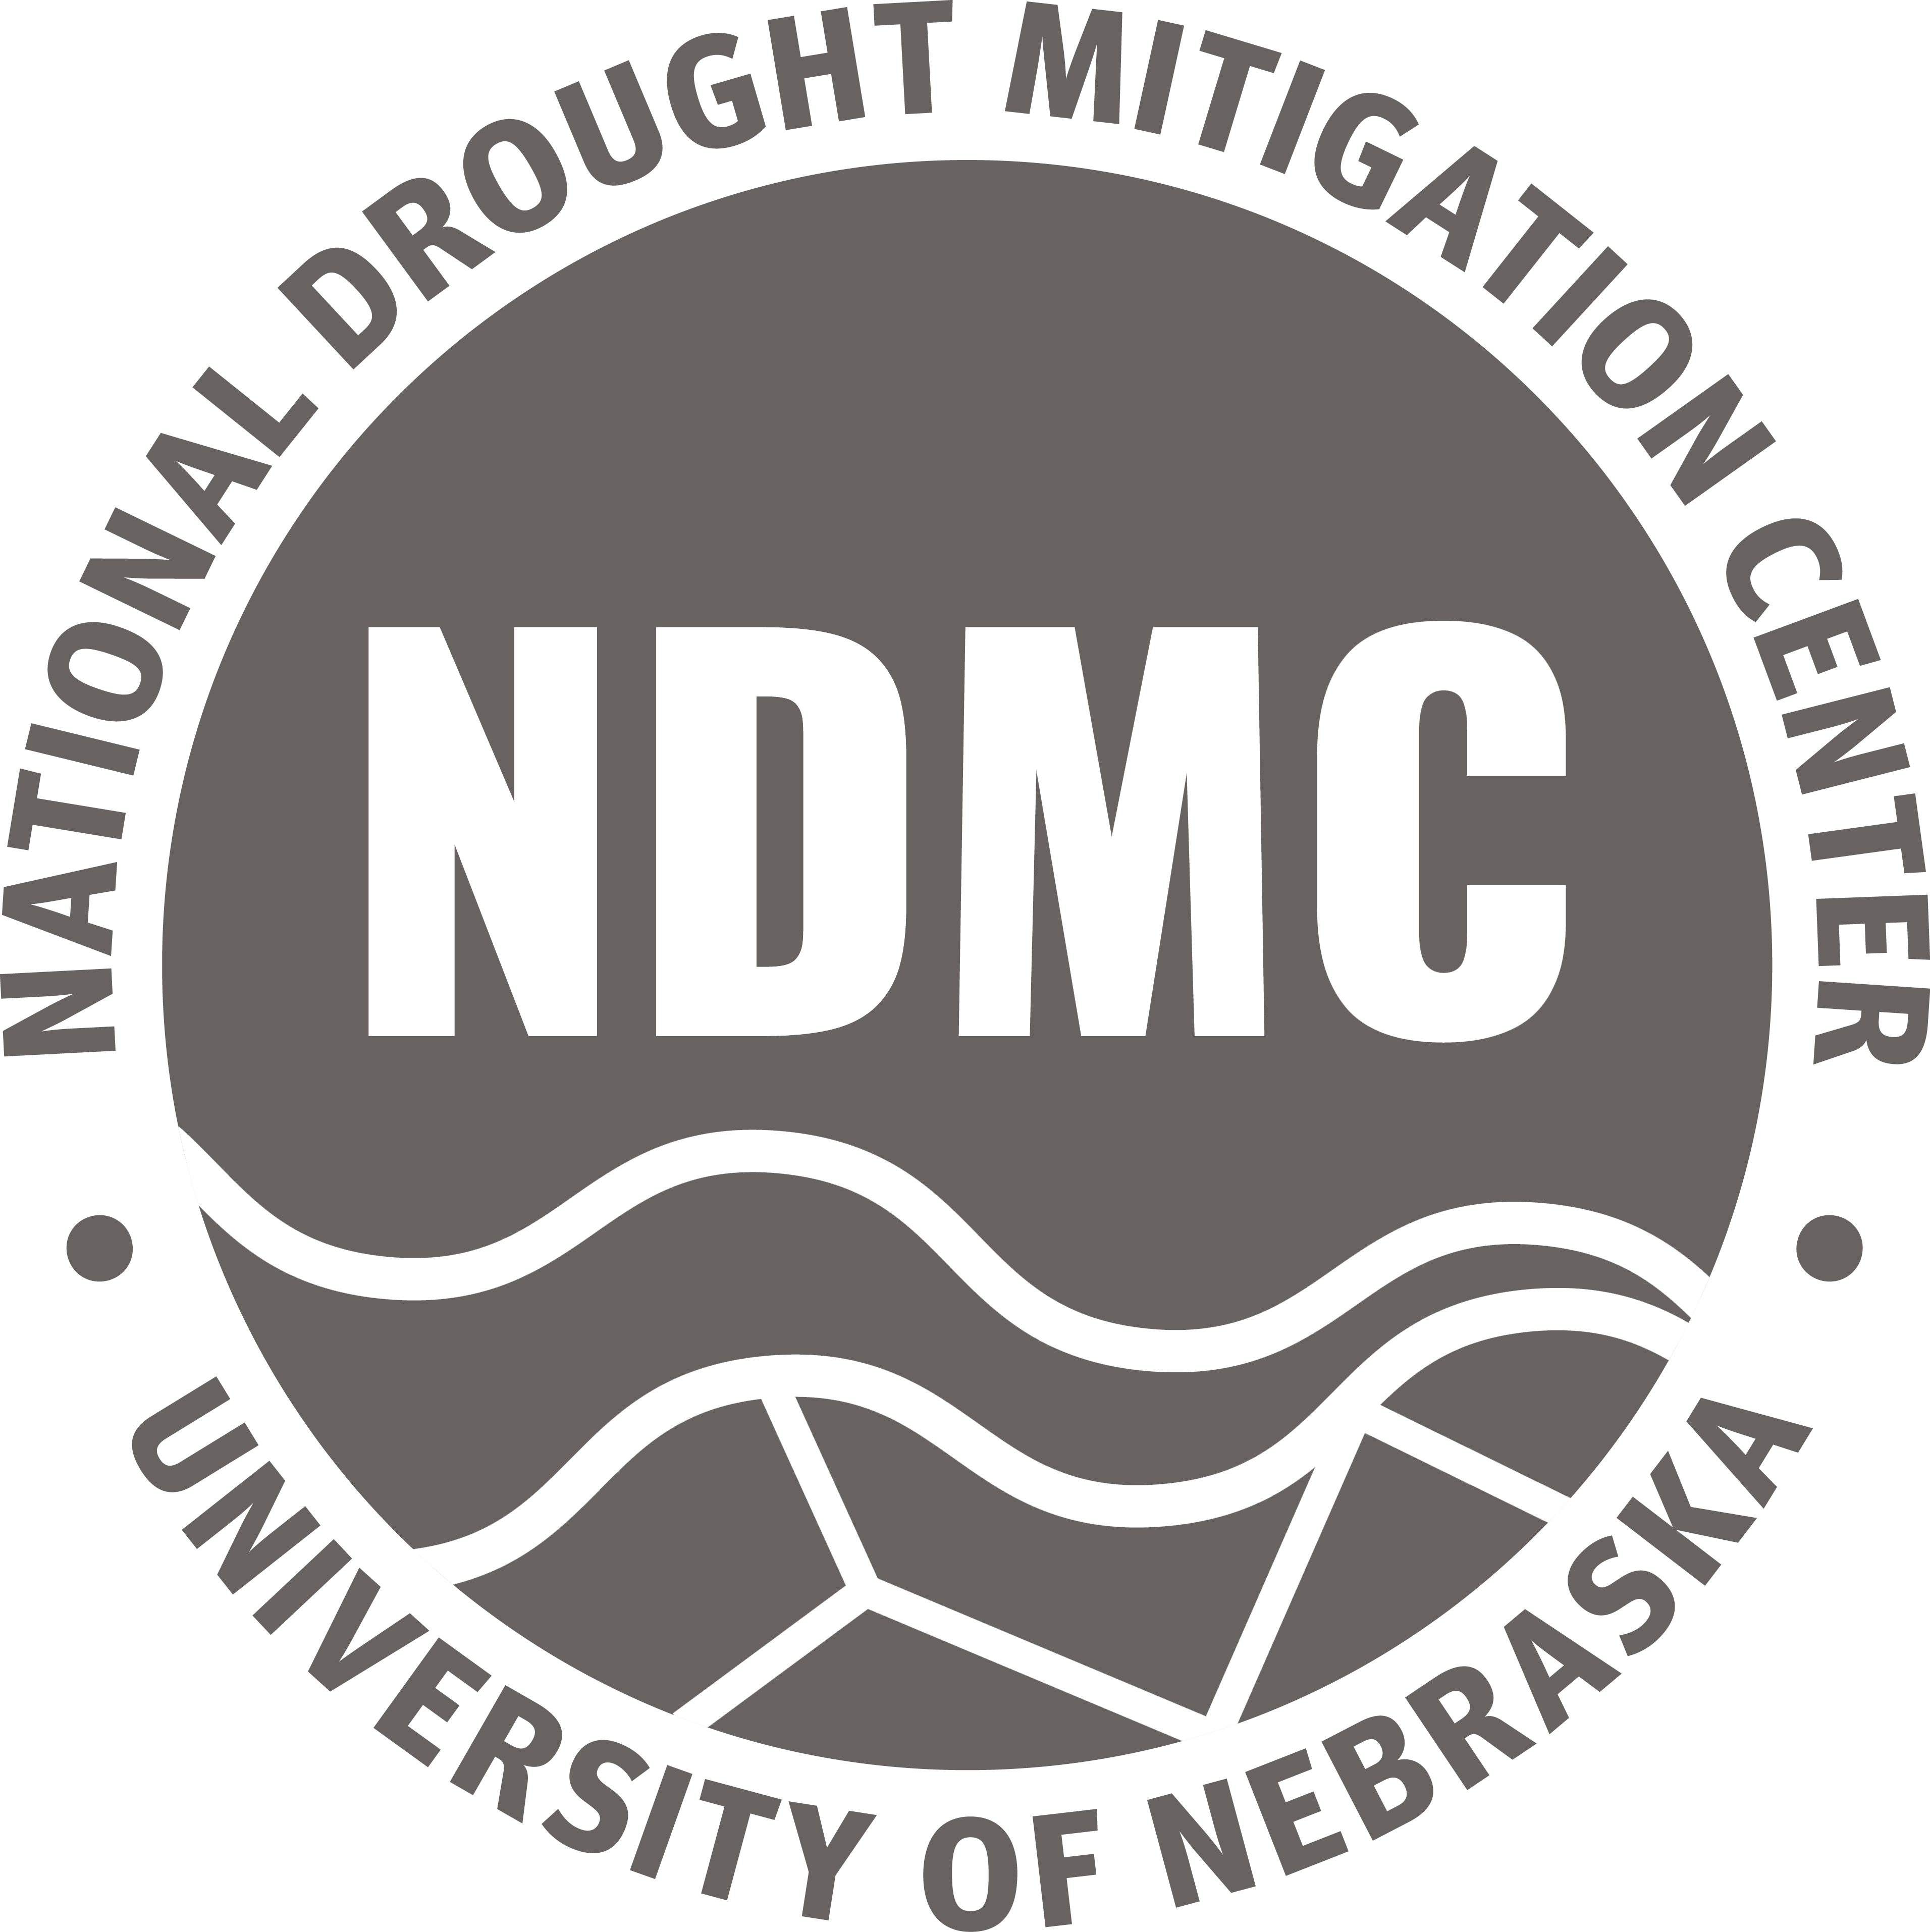 NMDC Logo